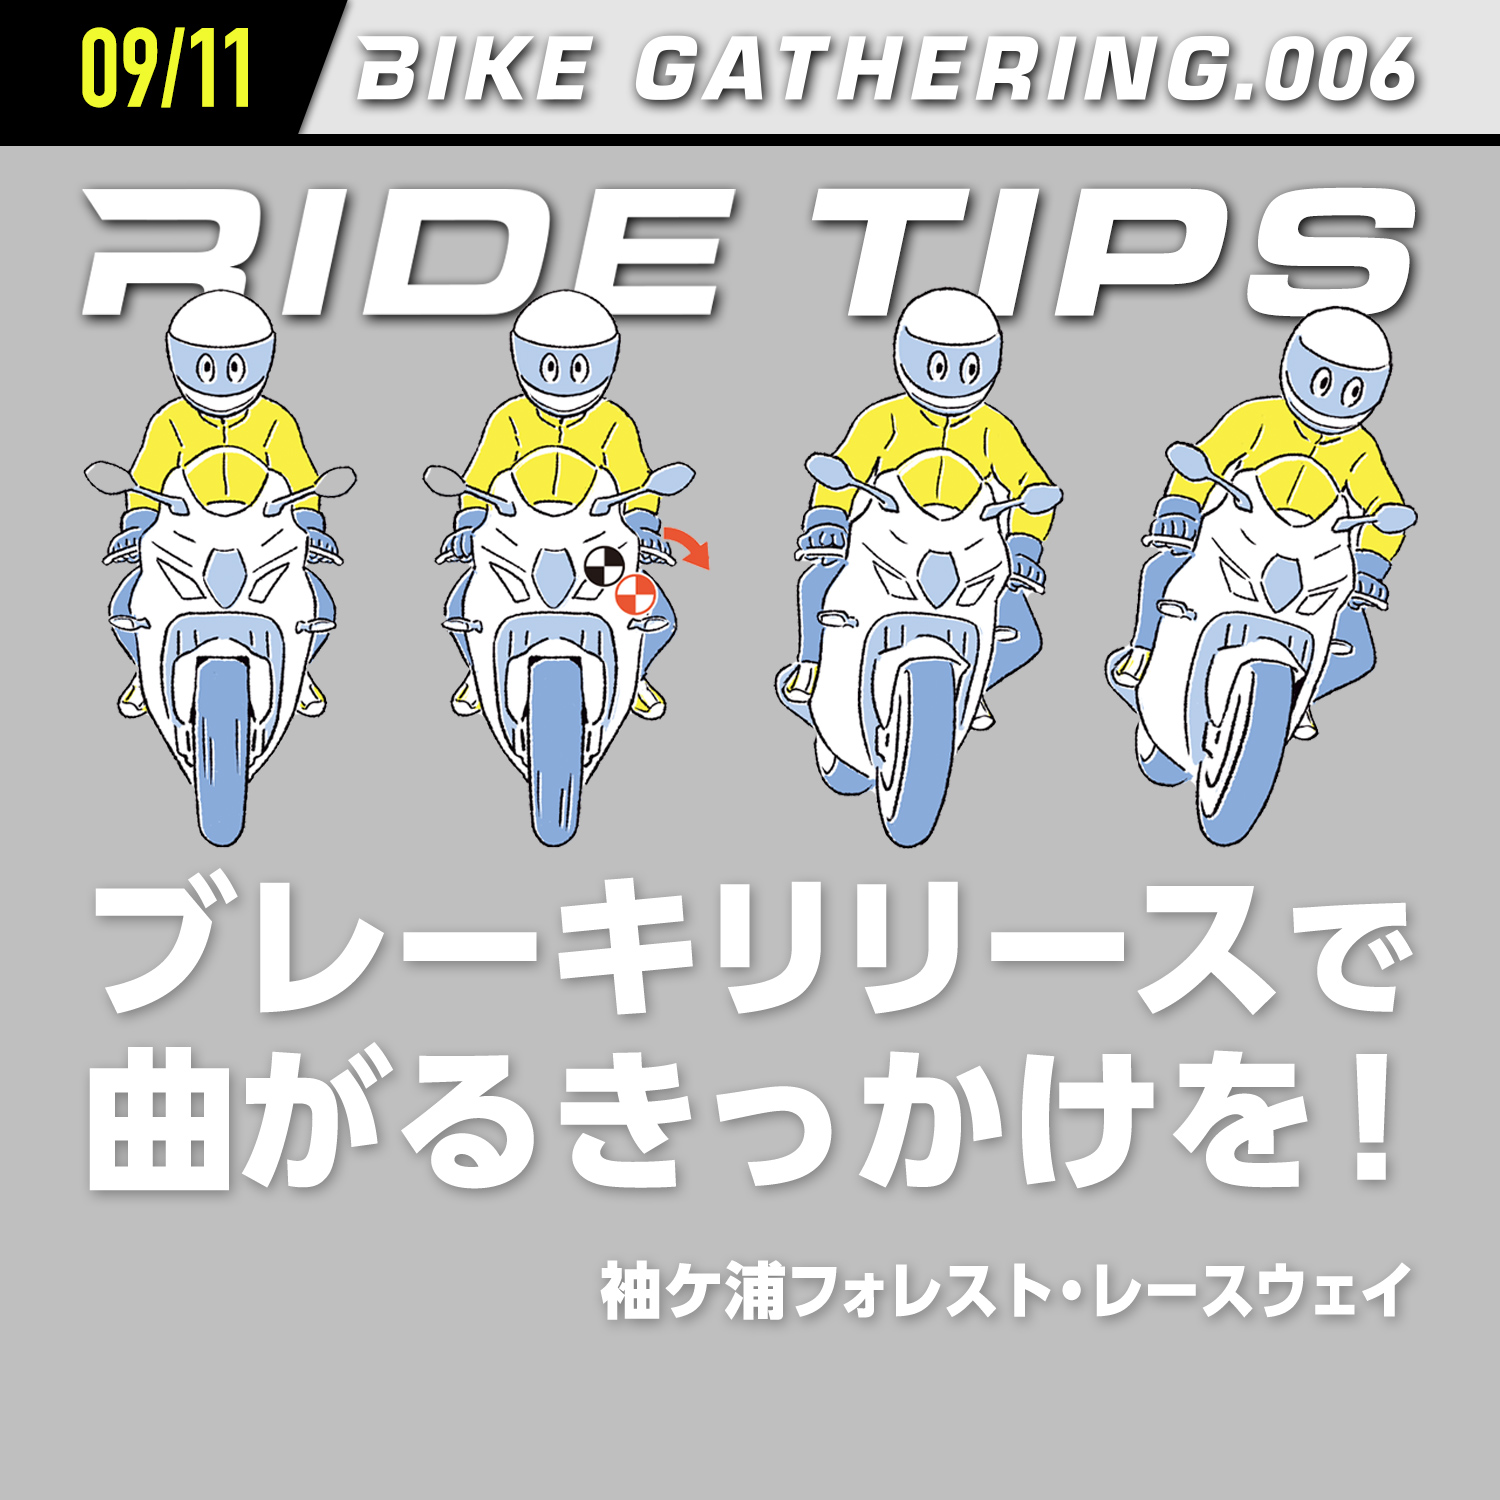 bikegathering_210911_contents_01_main.jpg